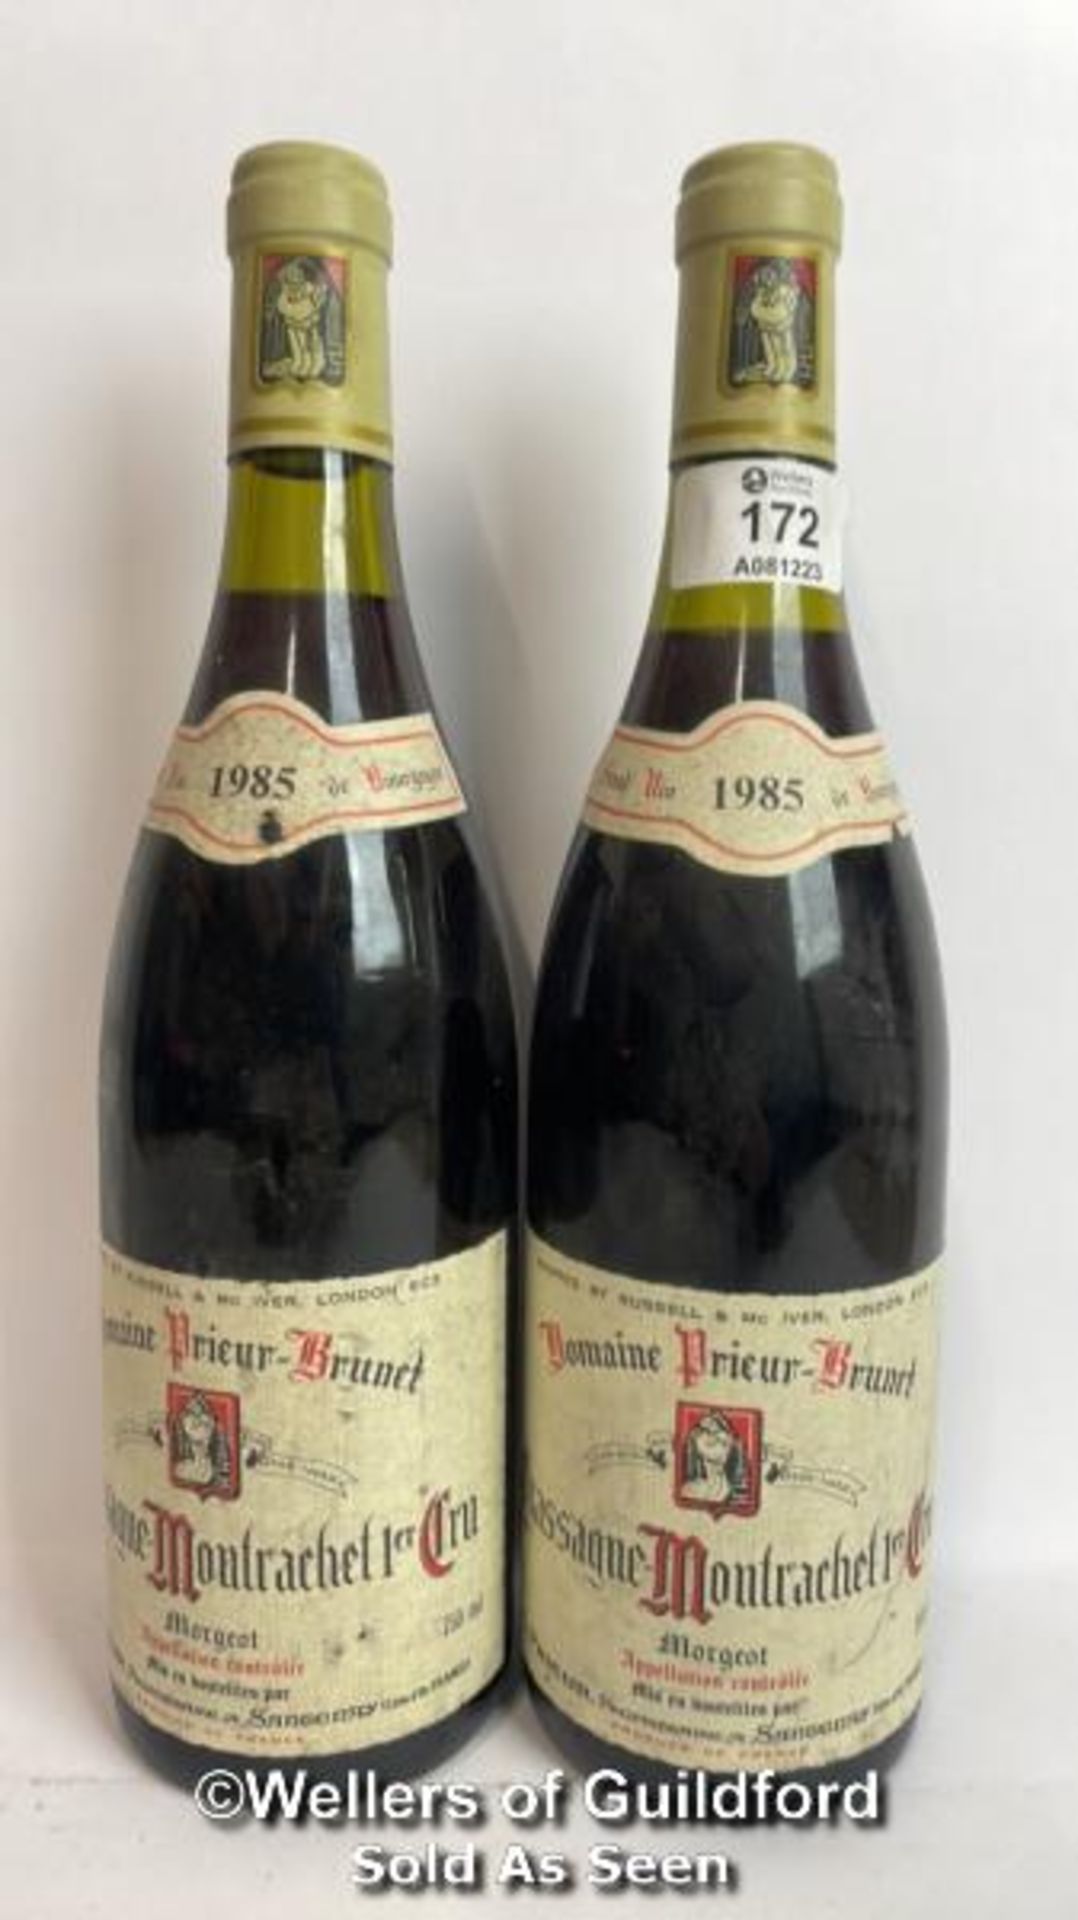 Two bottles of 1985 Domaine Prieur-Brunet Chassagne-Montrachet Premier Cru, 75cl, No vol indicated /